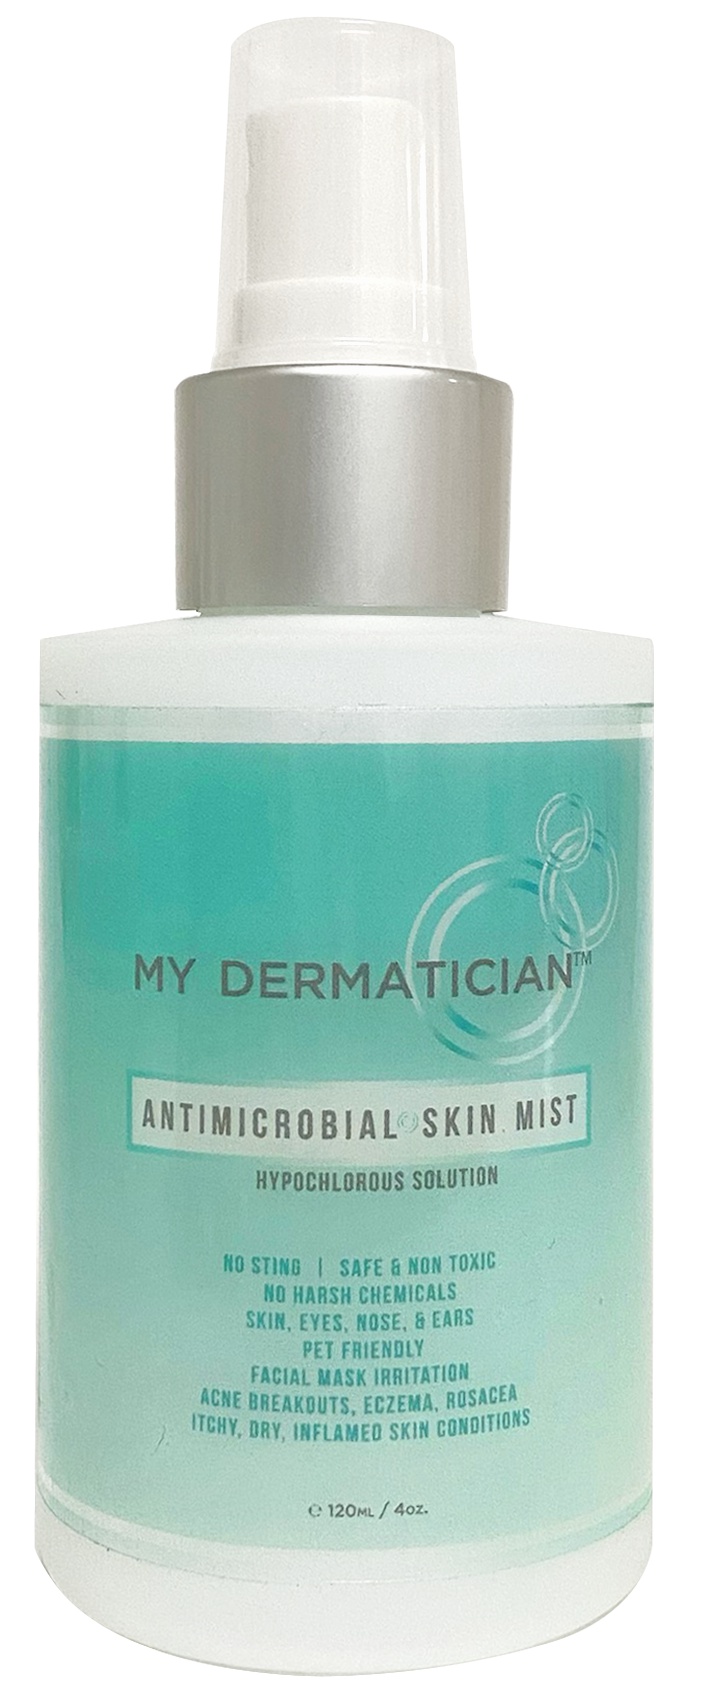 My Dermatician Antimicrobial Skin Mist